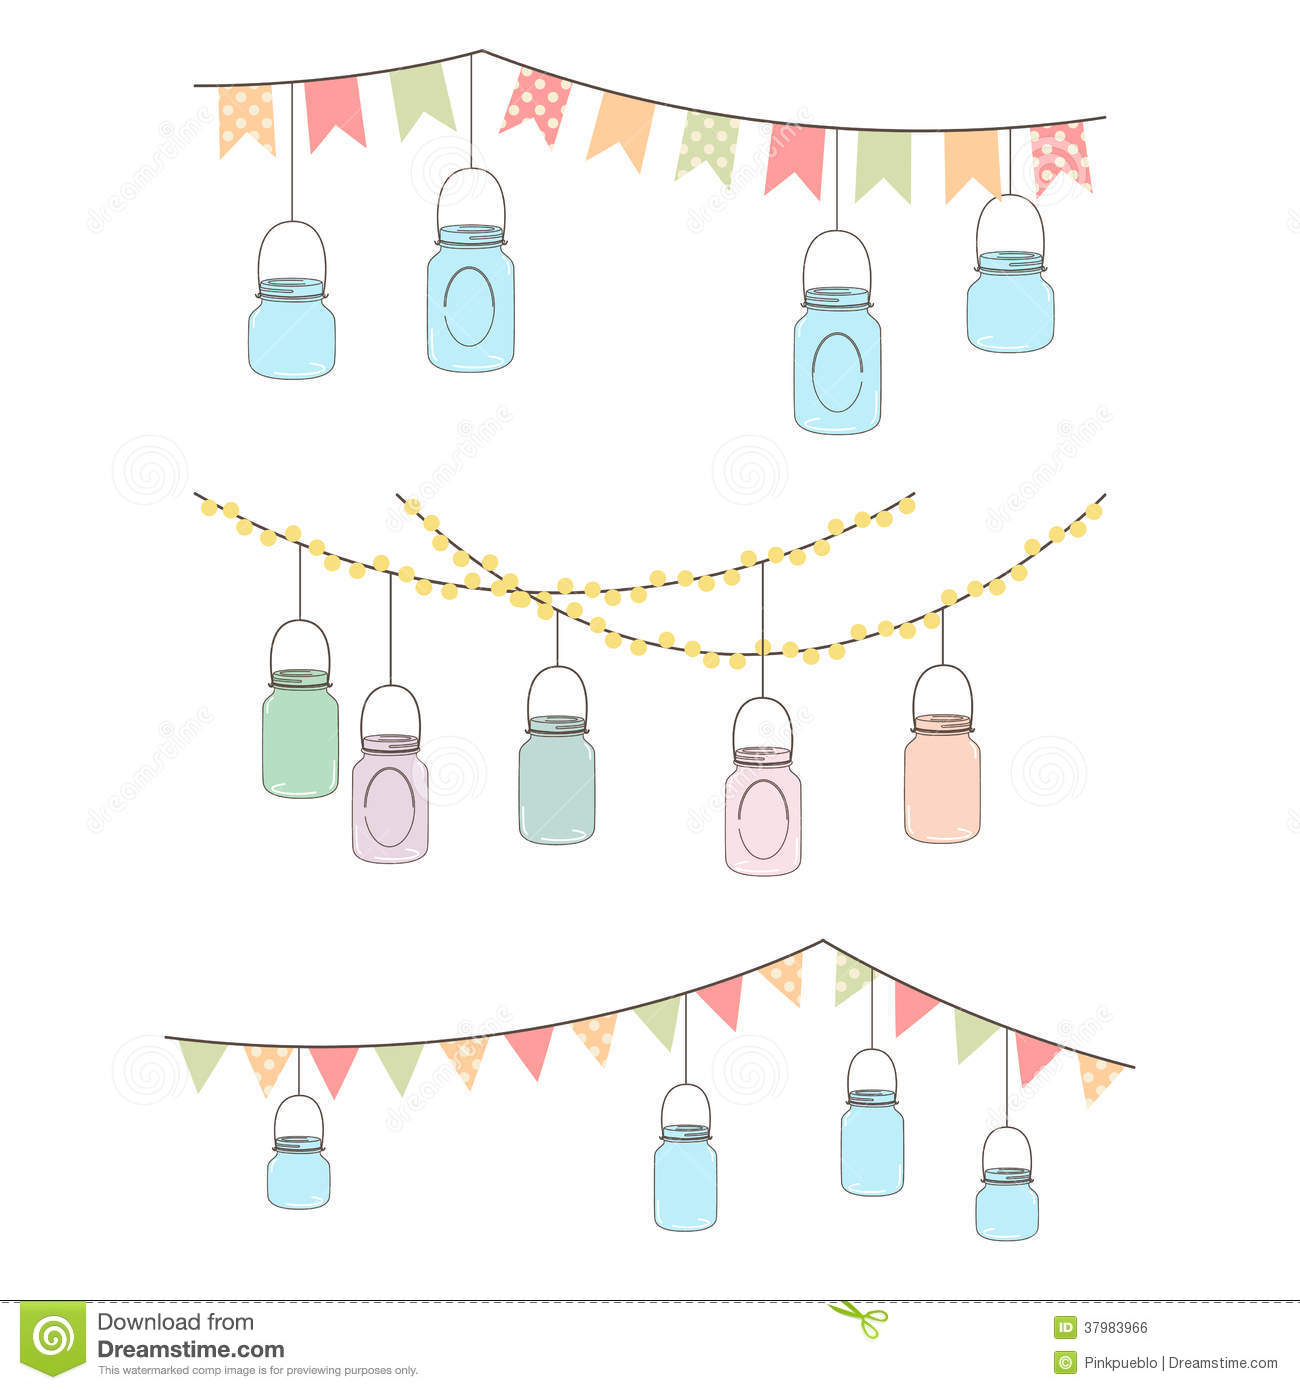 Vector Set Of Hanging Glass Jar Lights Royalty Free Stock Image